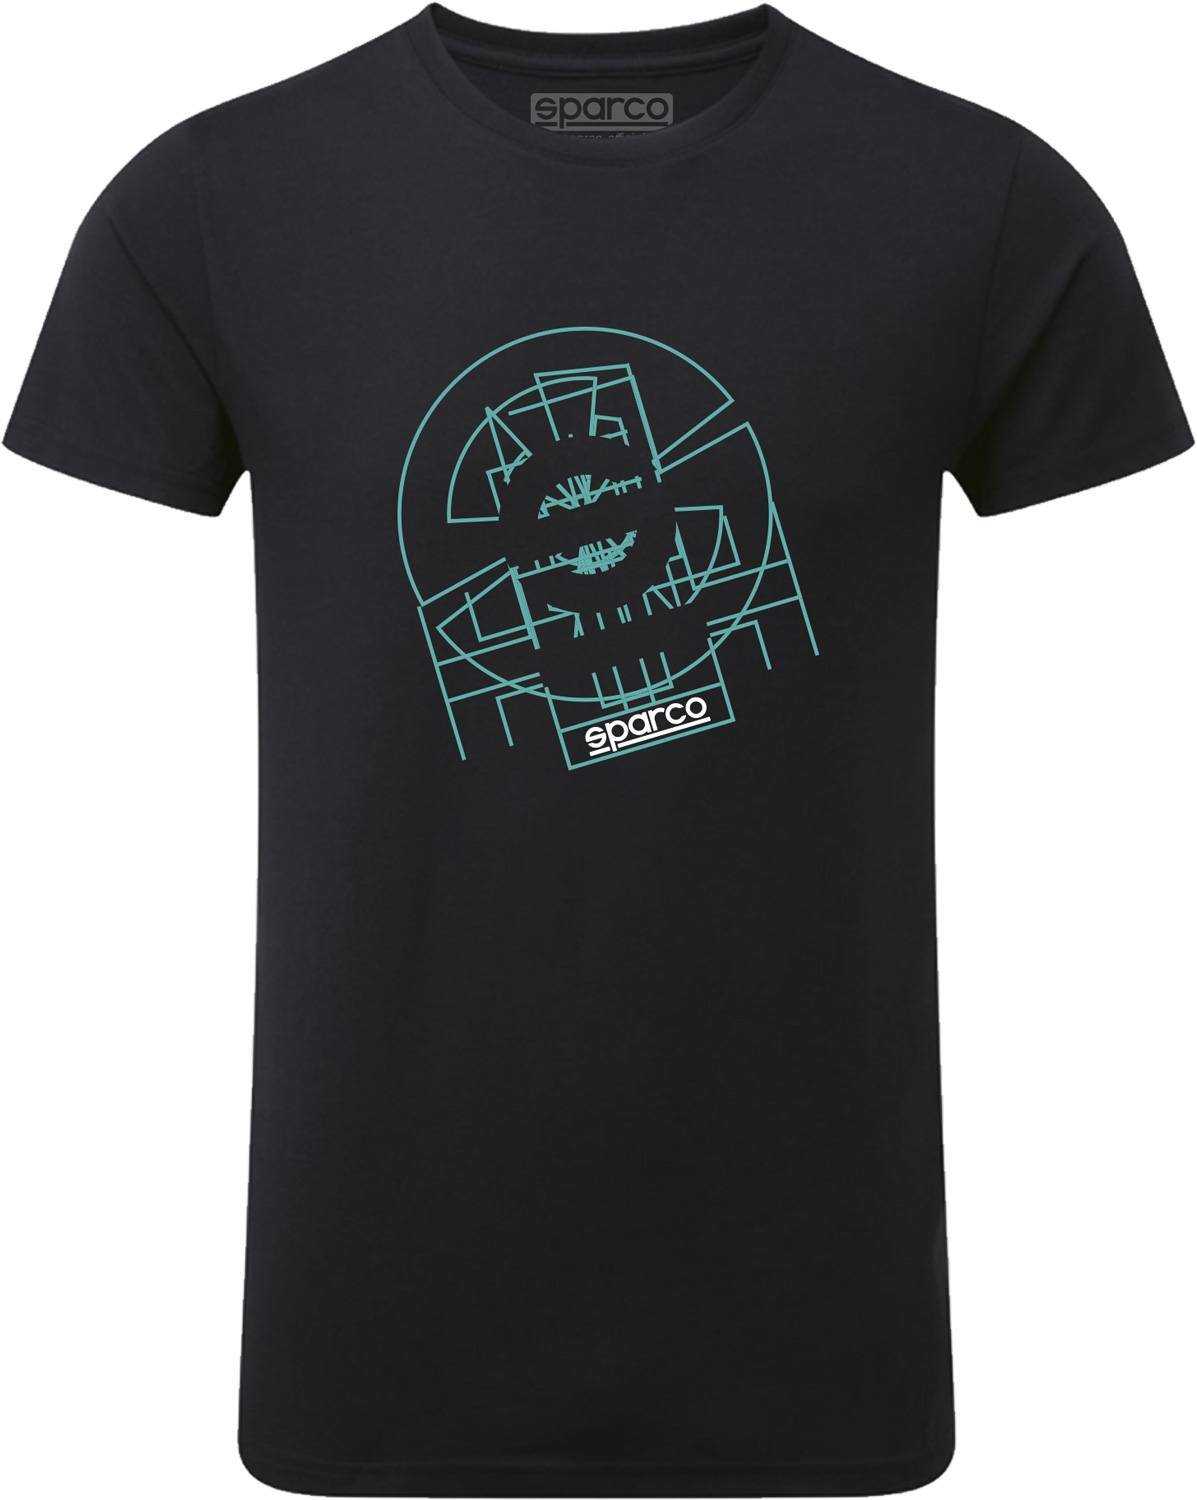 Sparco T-Shirt Tron, schwarz